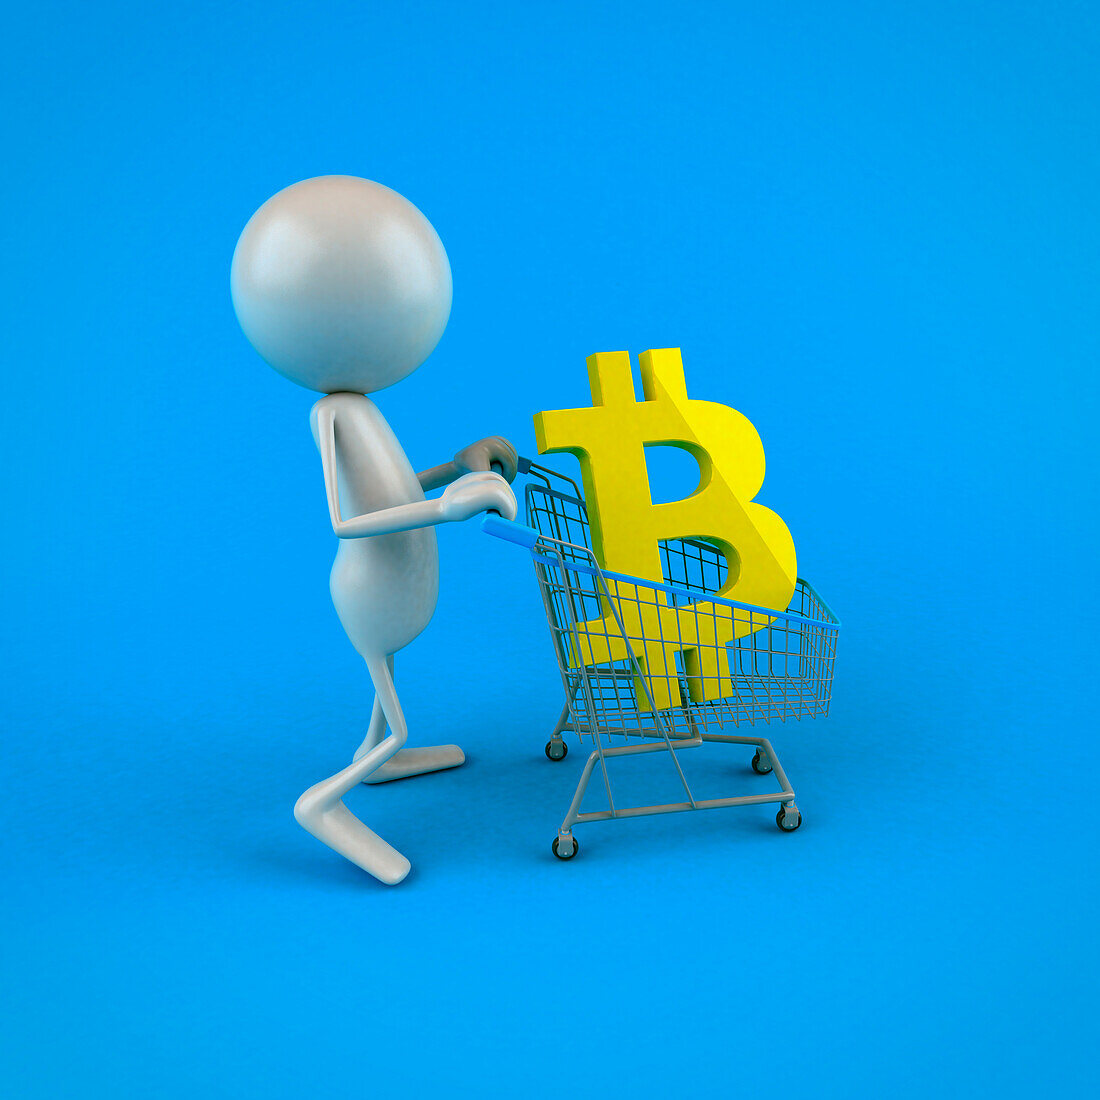 Shopping using bitcoin, conceptual illustration